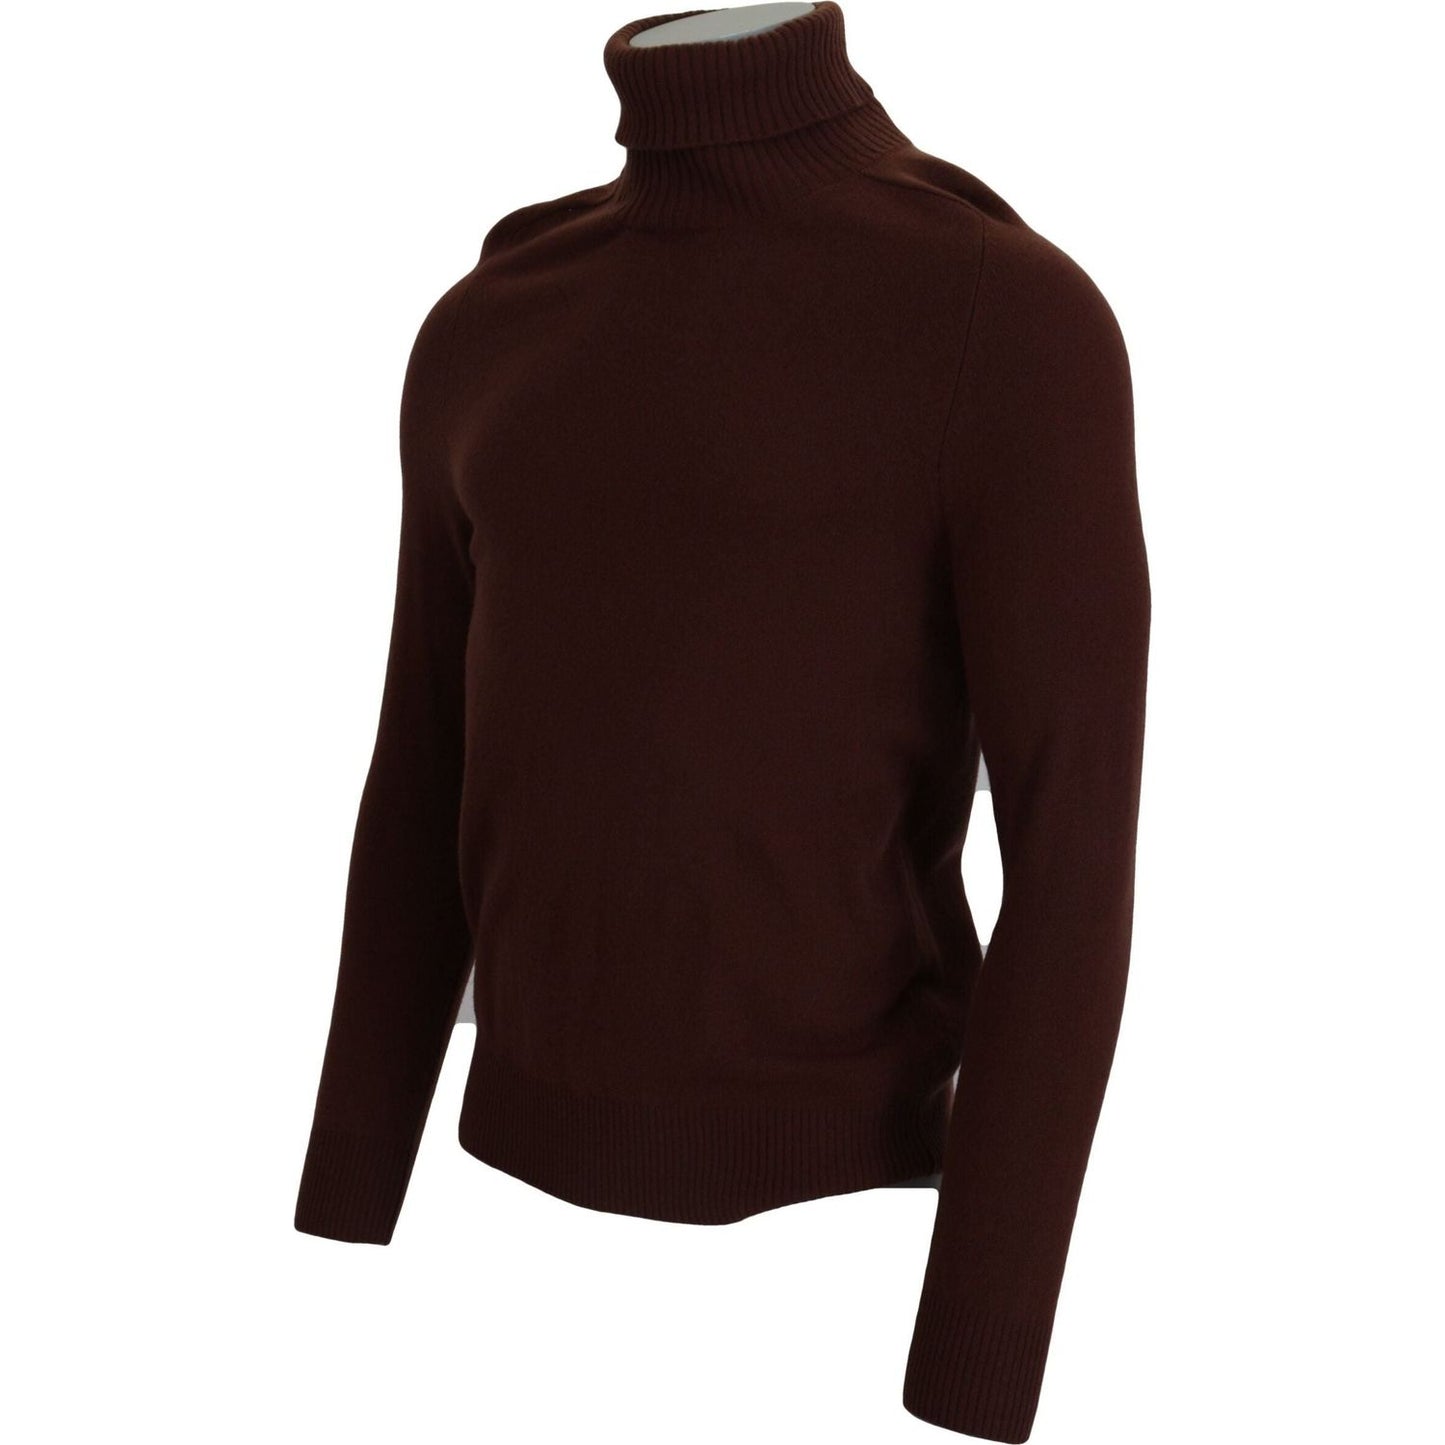 Paolo Pecora Milano Elegant Burgundy Wool Turtleneck Sweater bordeaux-wool-turtleneck-pullover-sweater IMG_1044-scaled-606add62-9fd.jpg